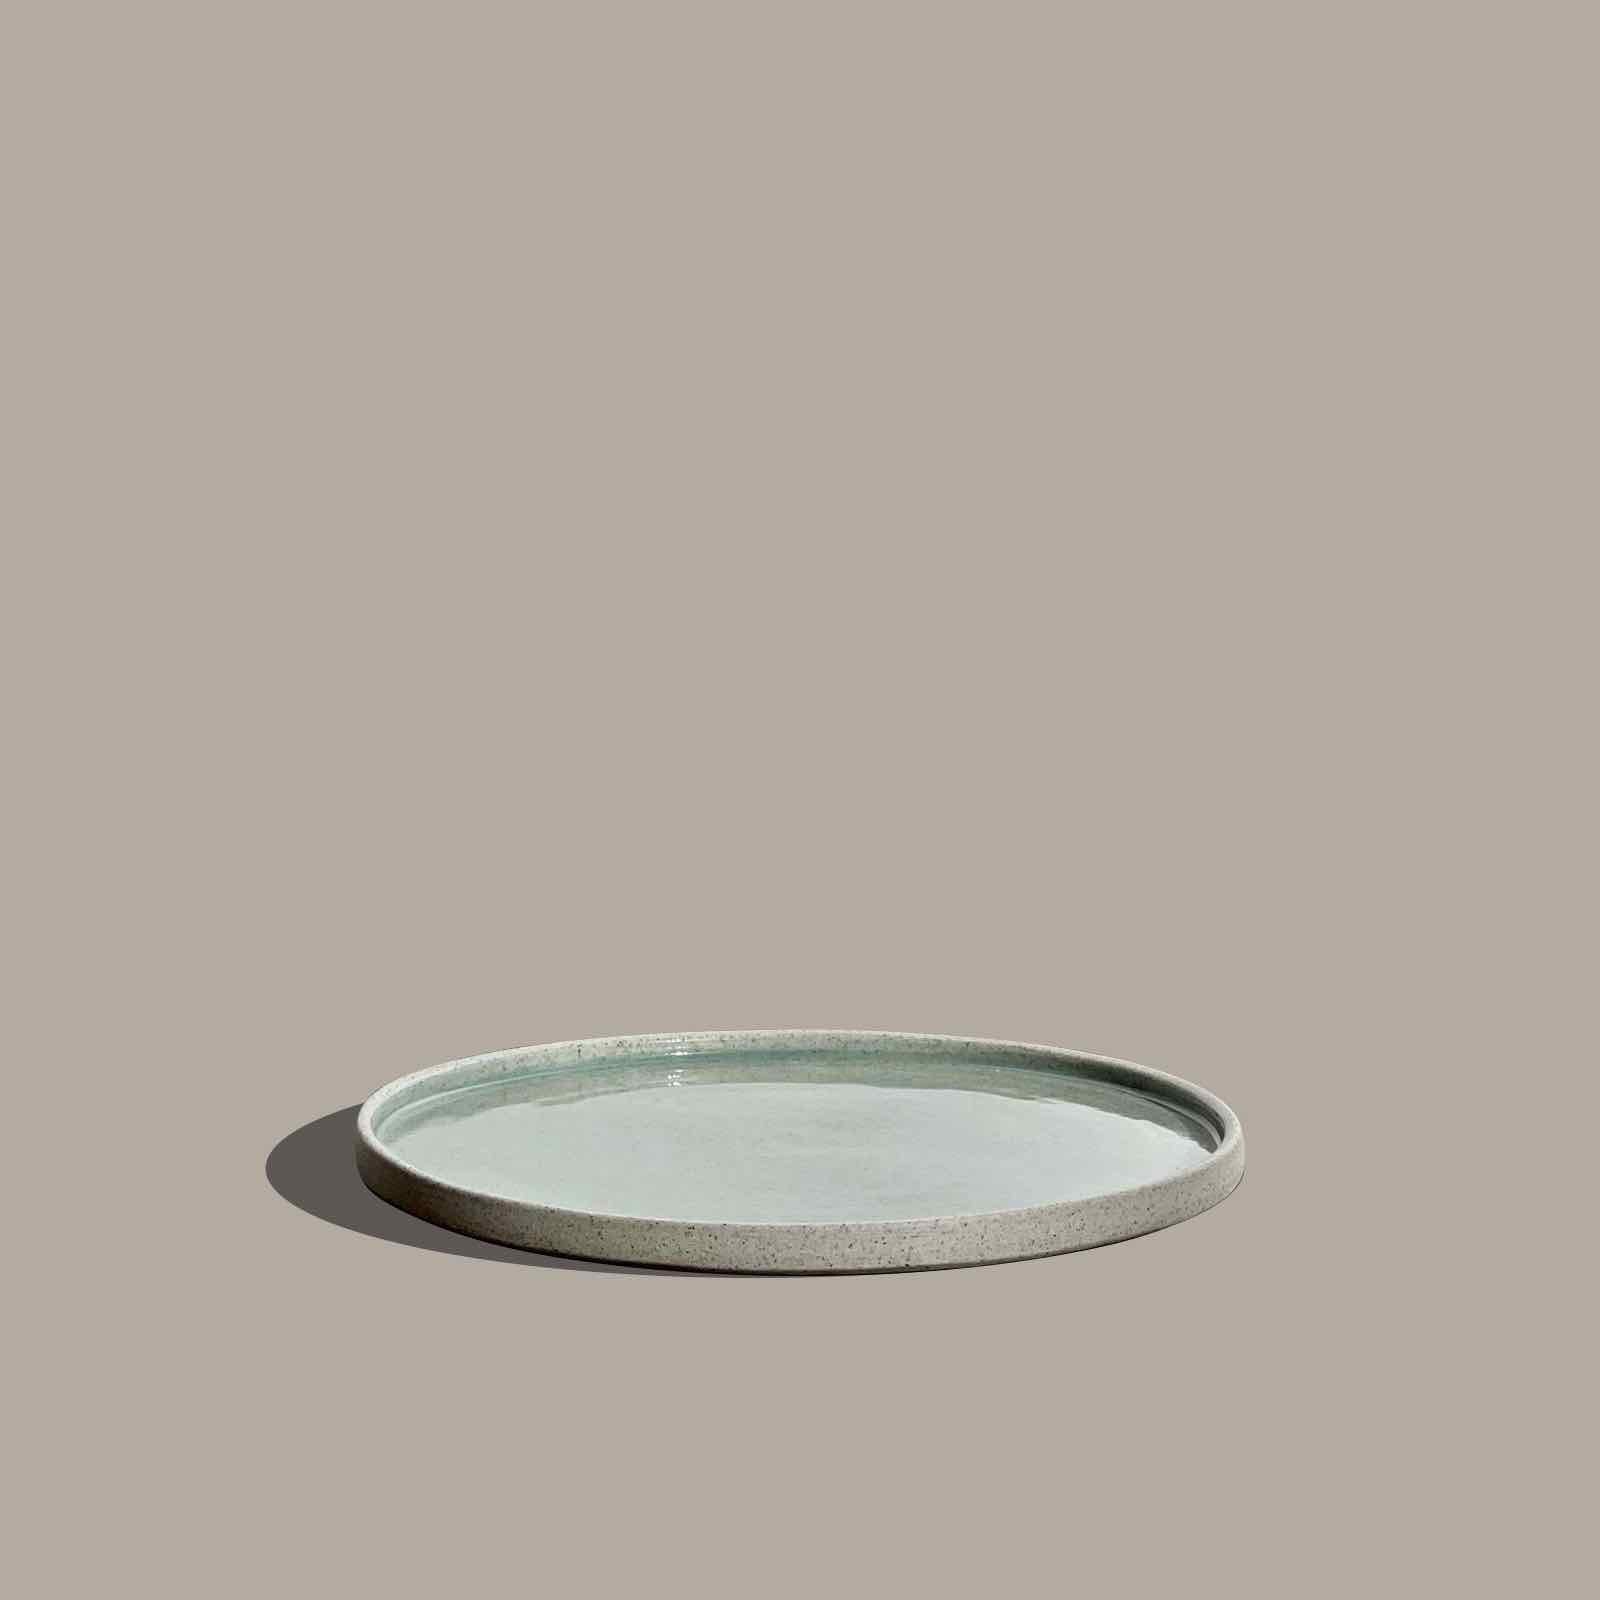 Round ceramic tray